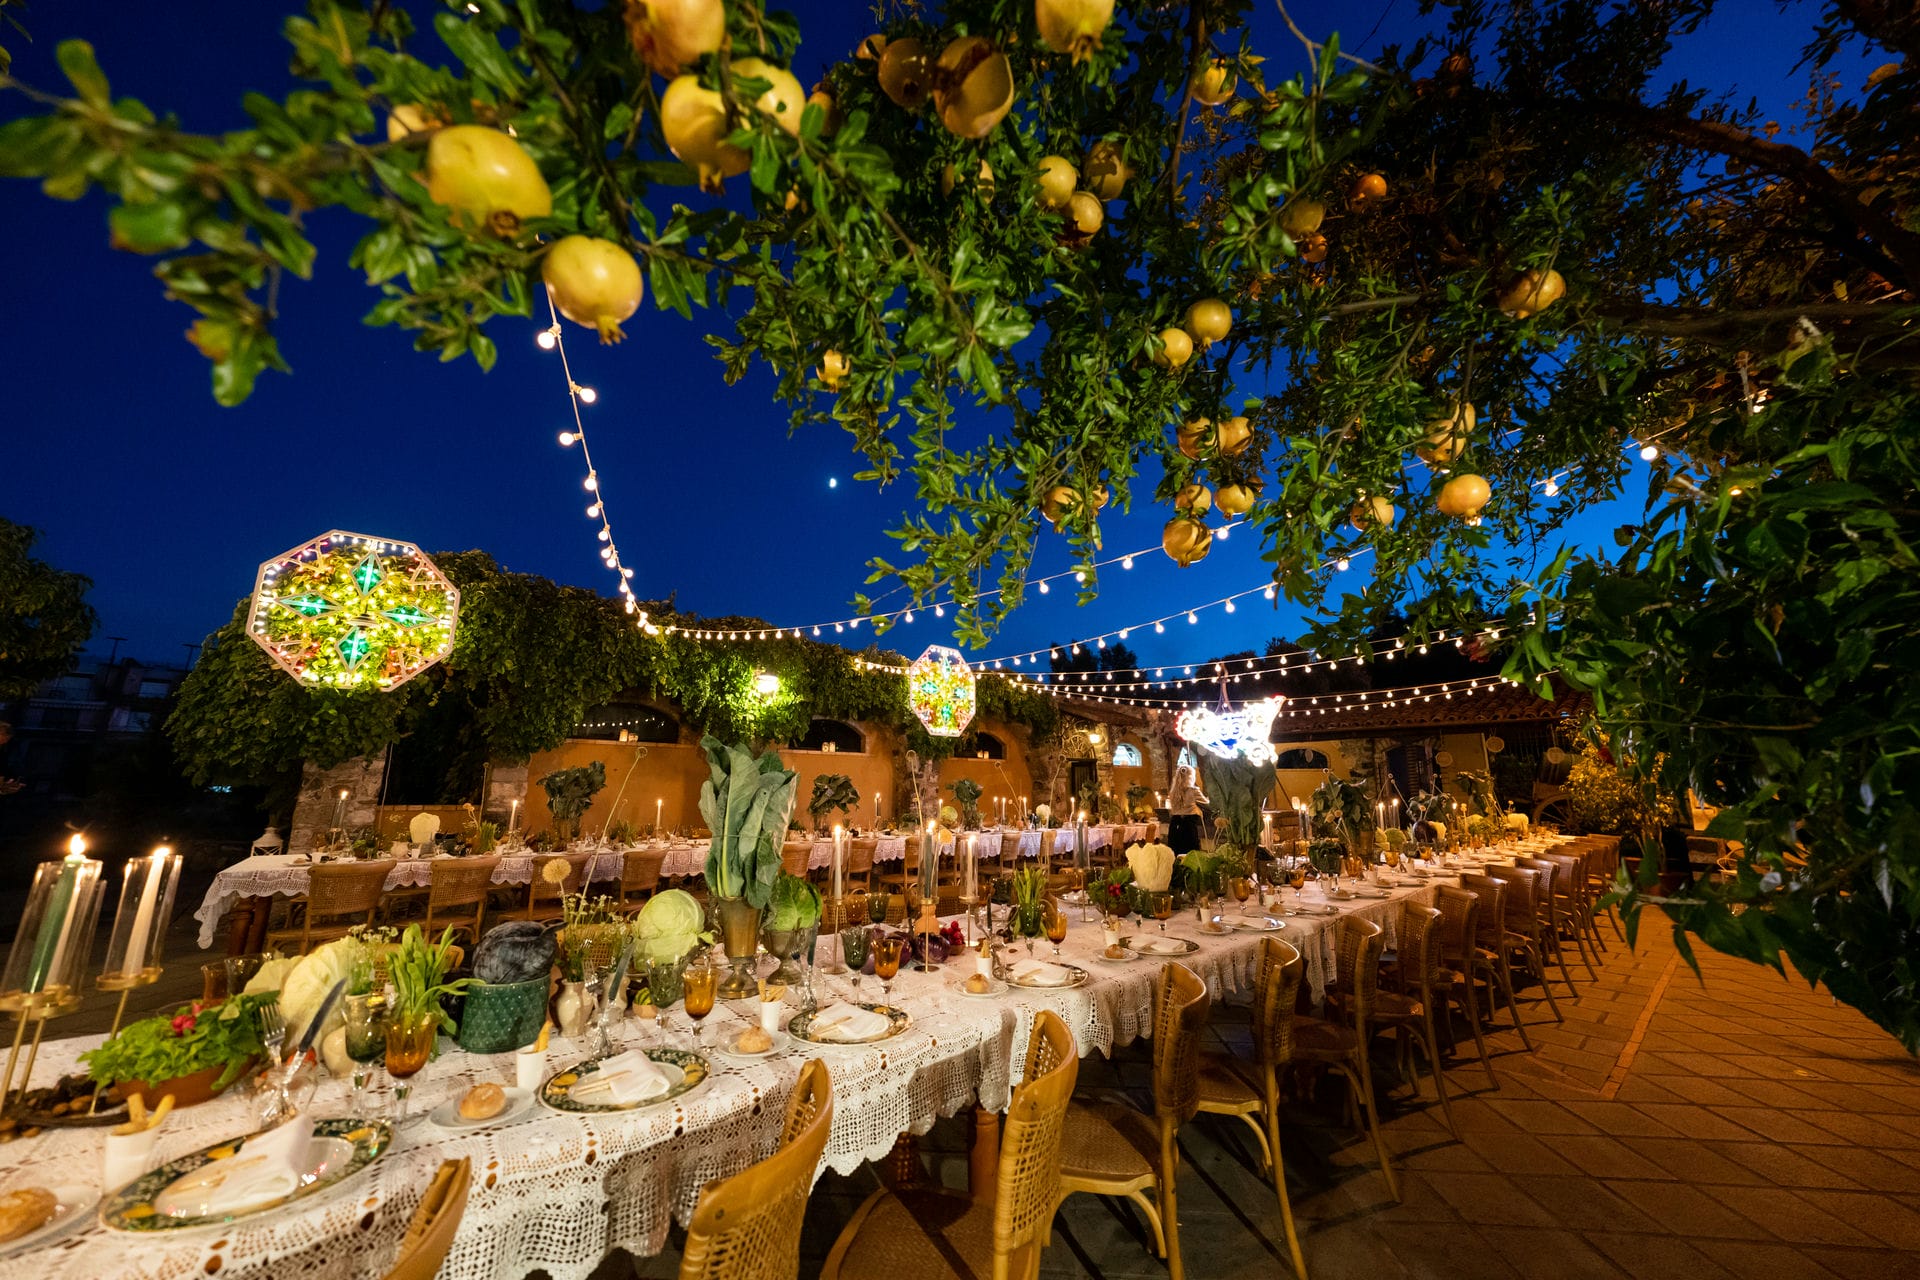 Al fresco dining event under lemon tree